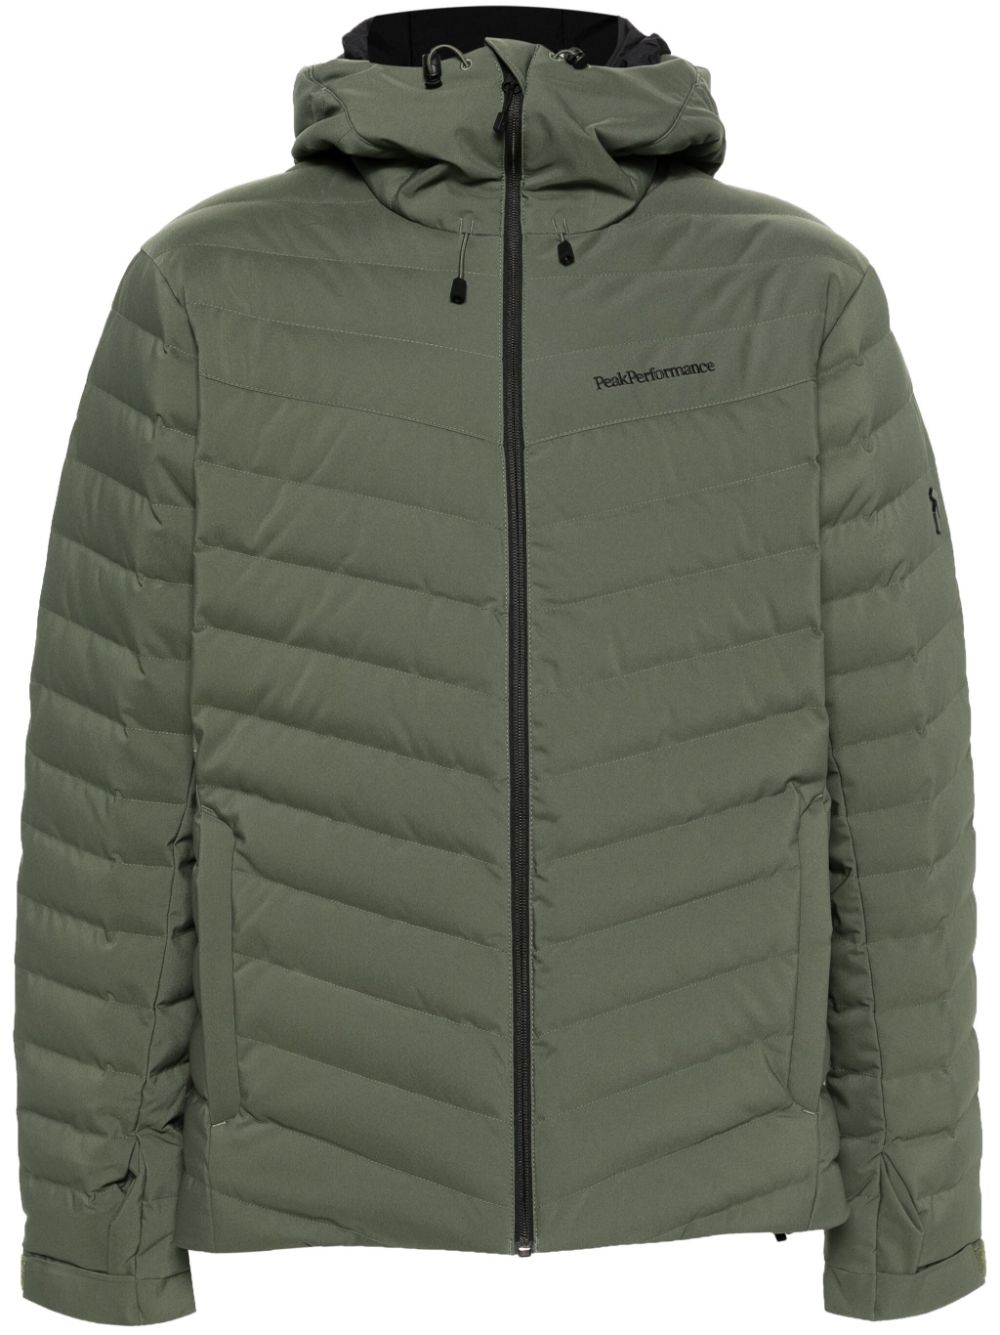 Green zfront zip fastening jacket